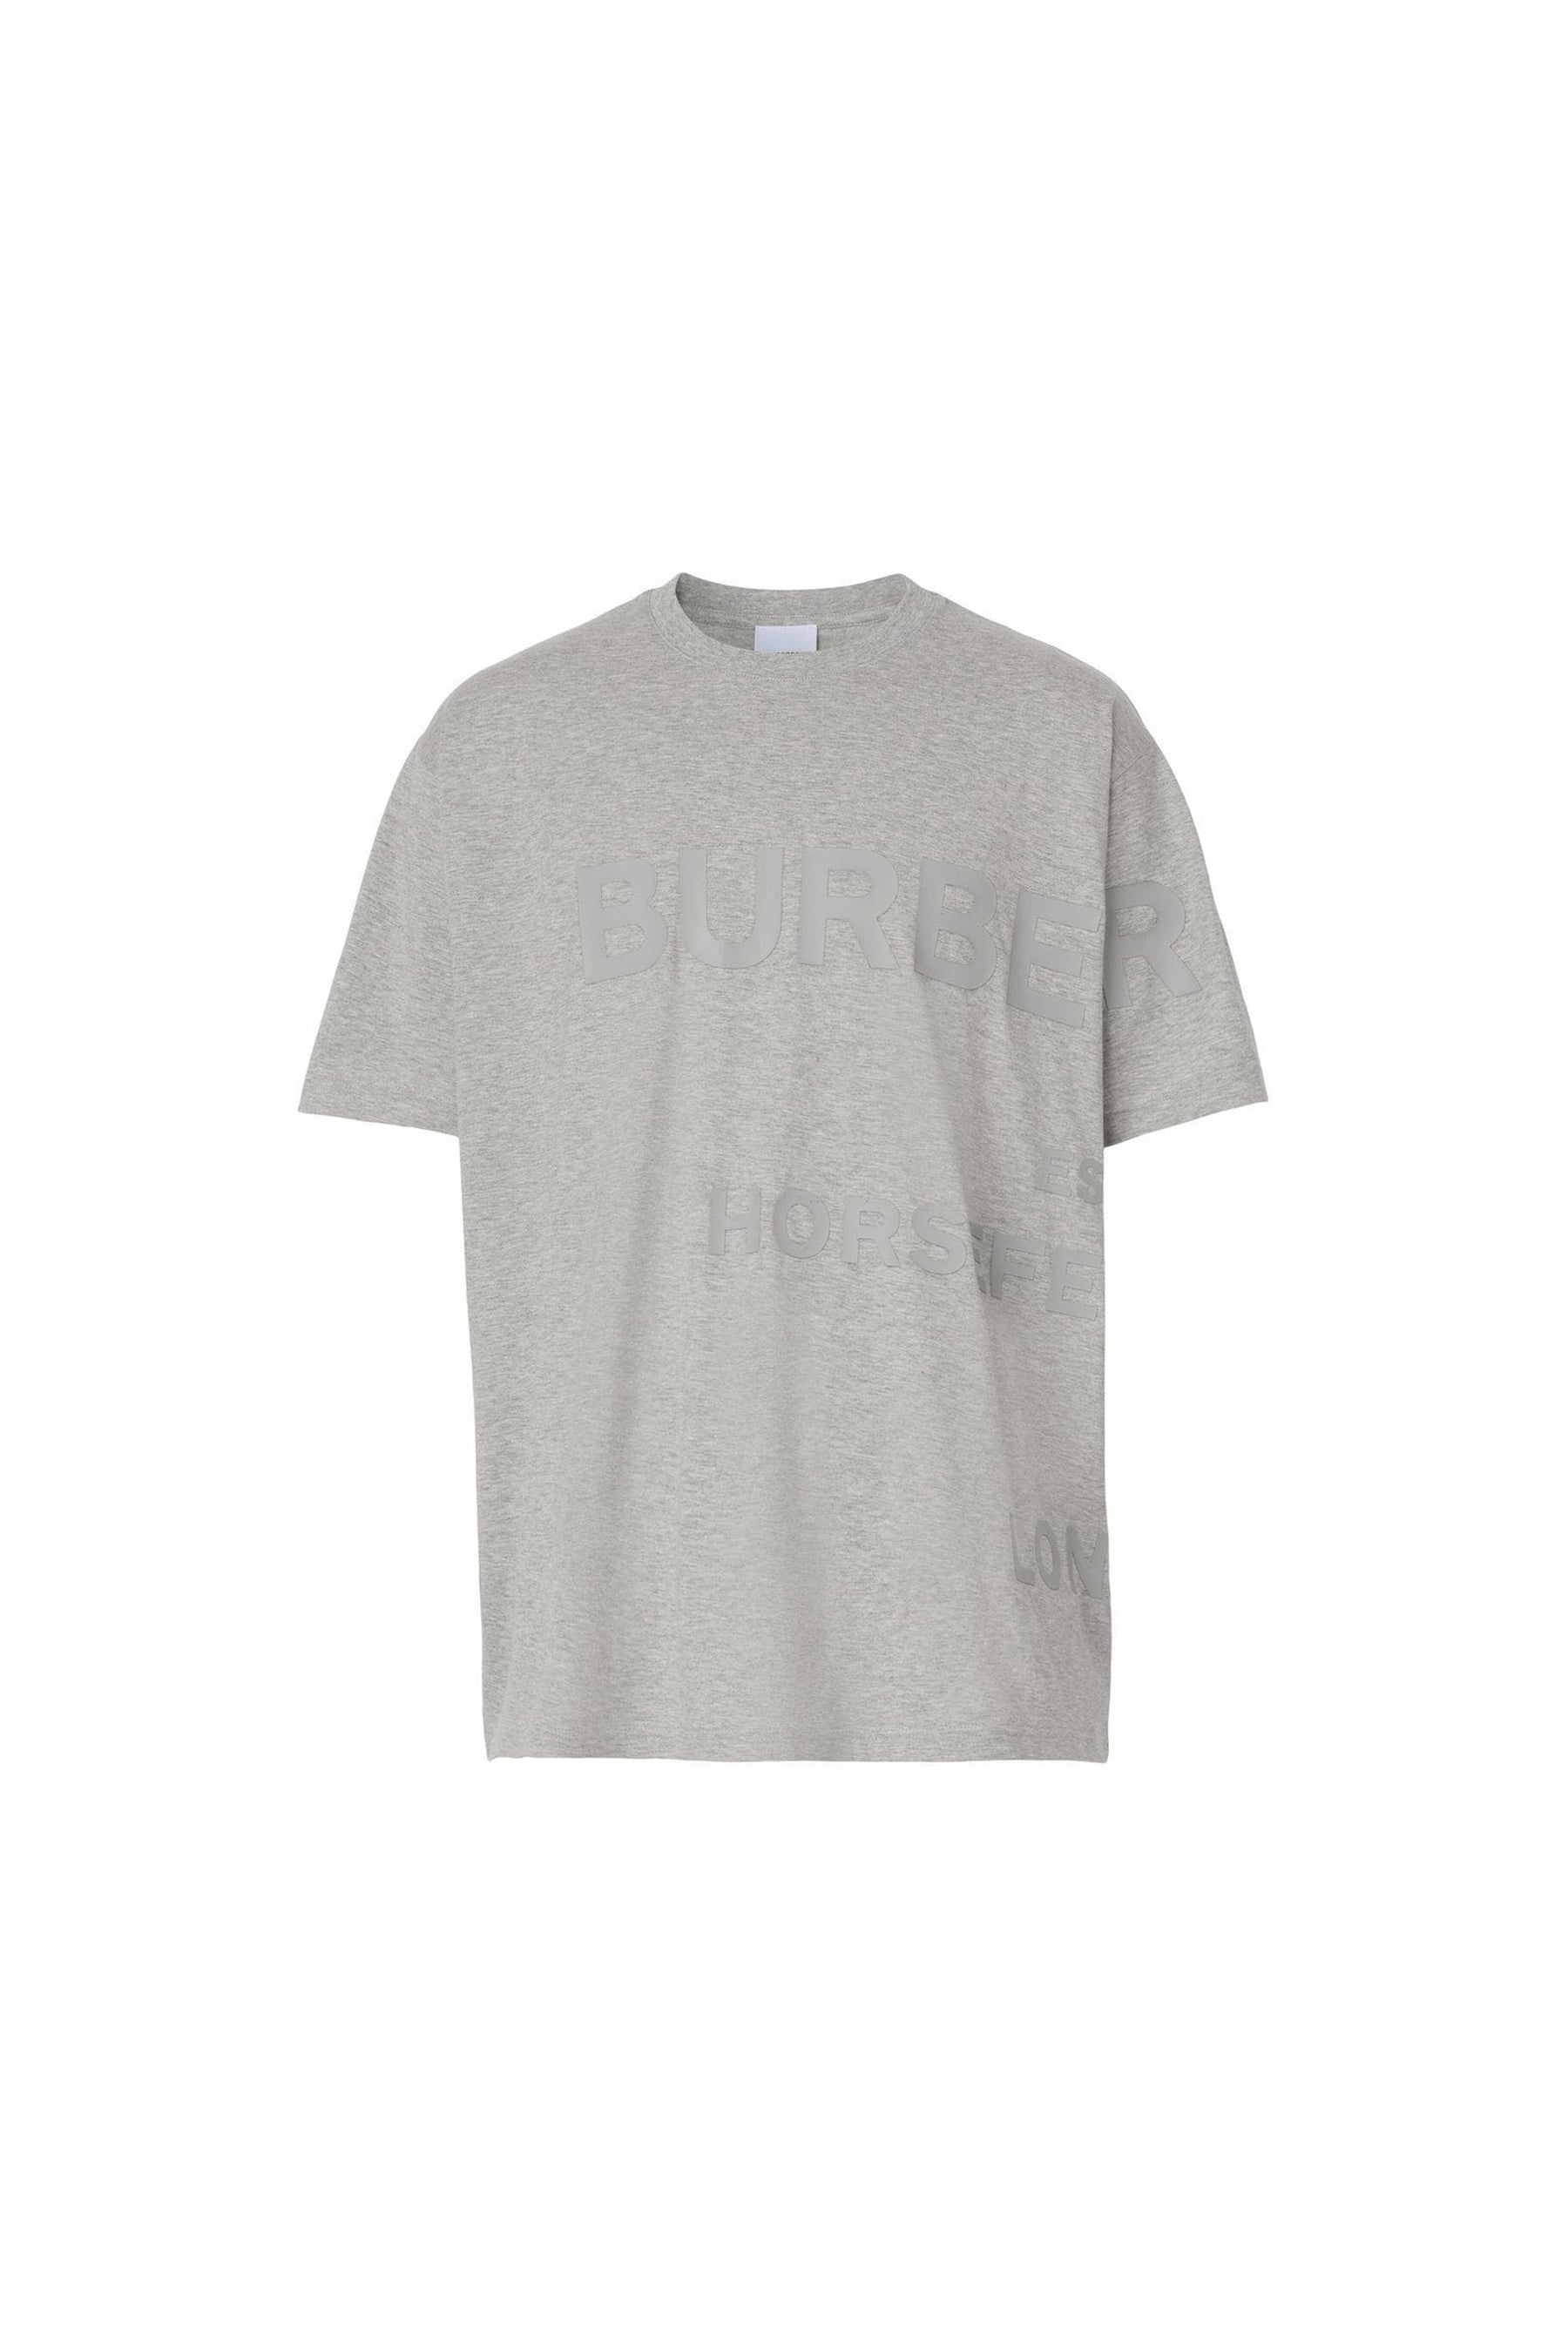 Burberry Horseferry-print cotton T-shirt